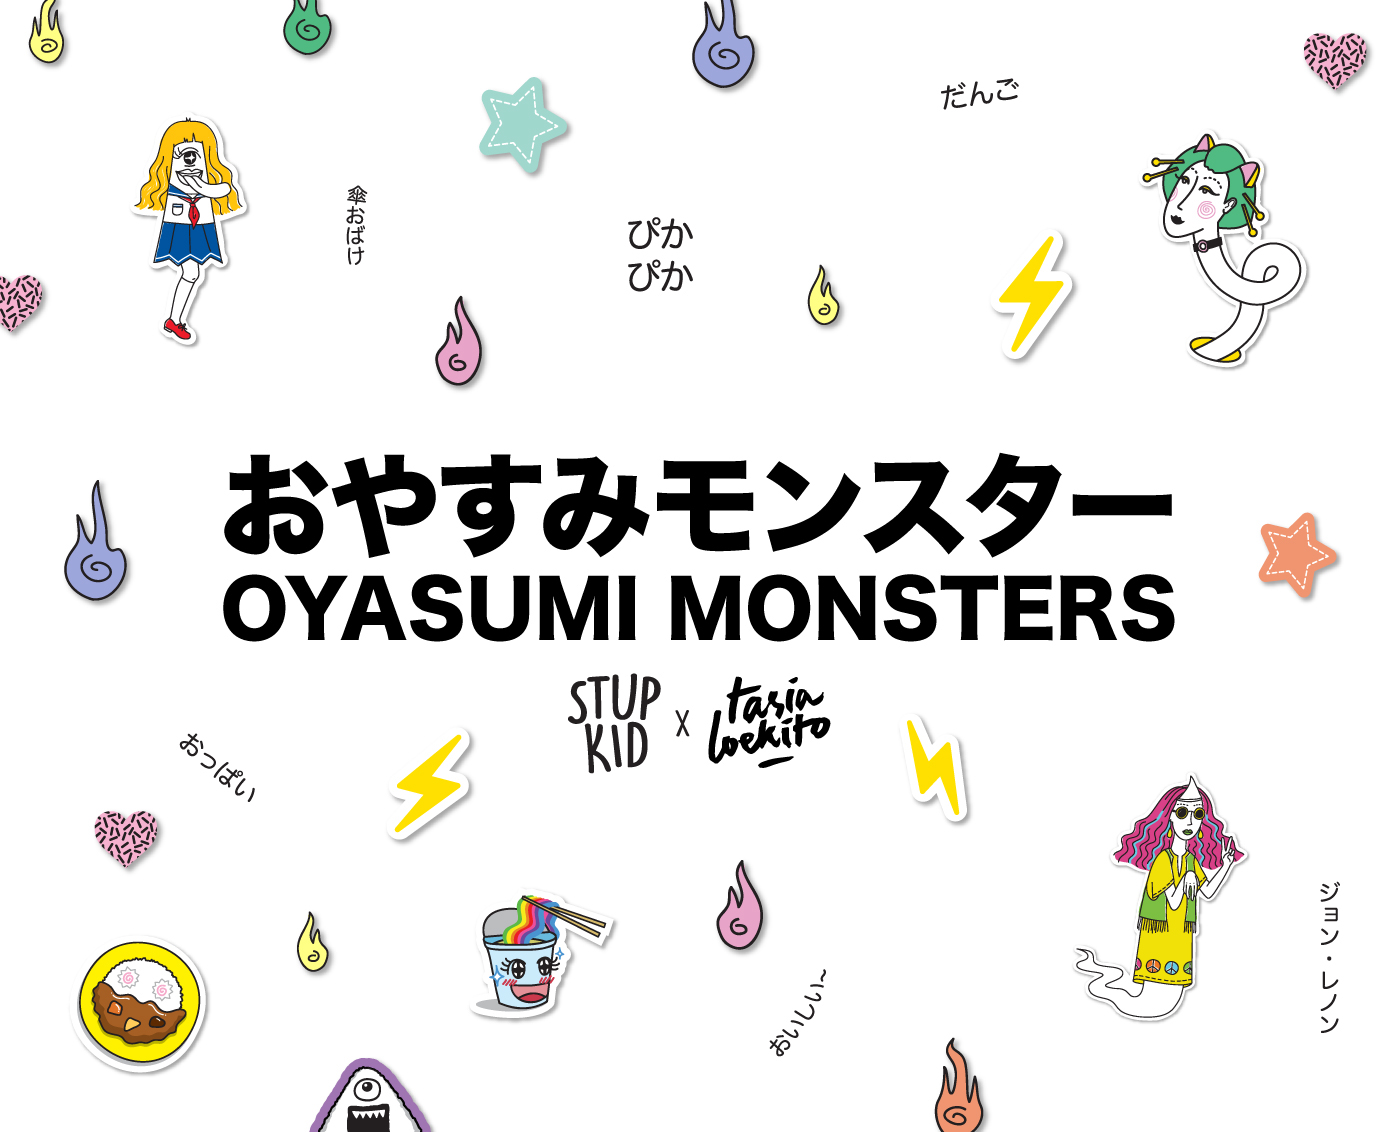 stupkid oyasumi monsters japanese ghosts  Rokurokubi kasa obake Food  baka